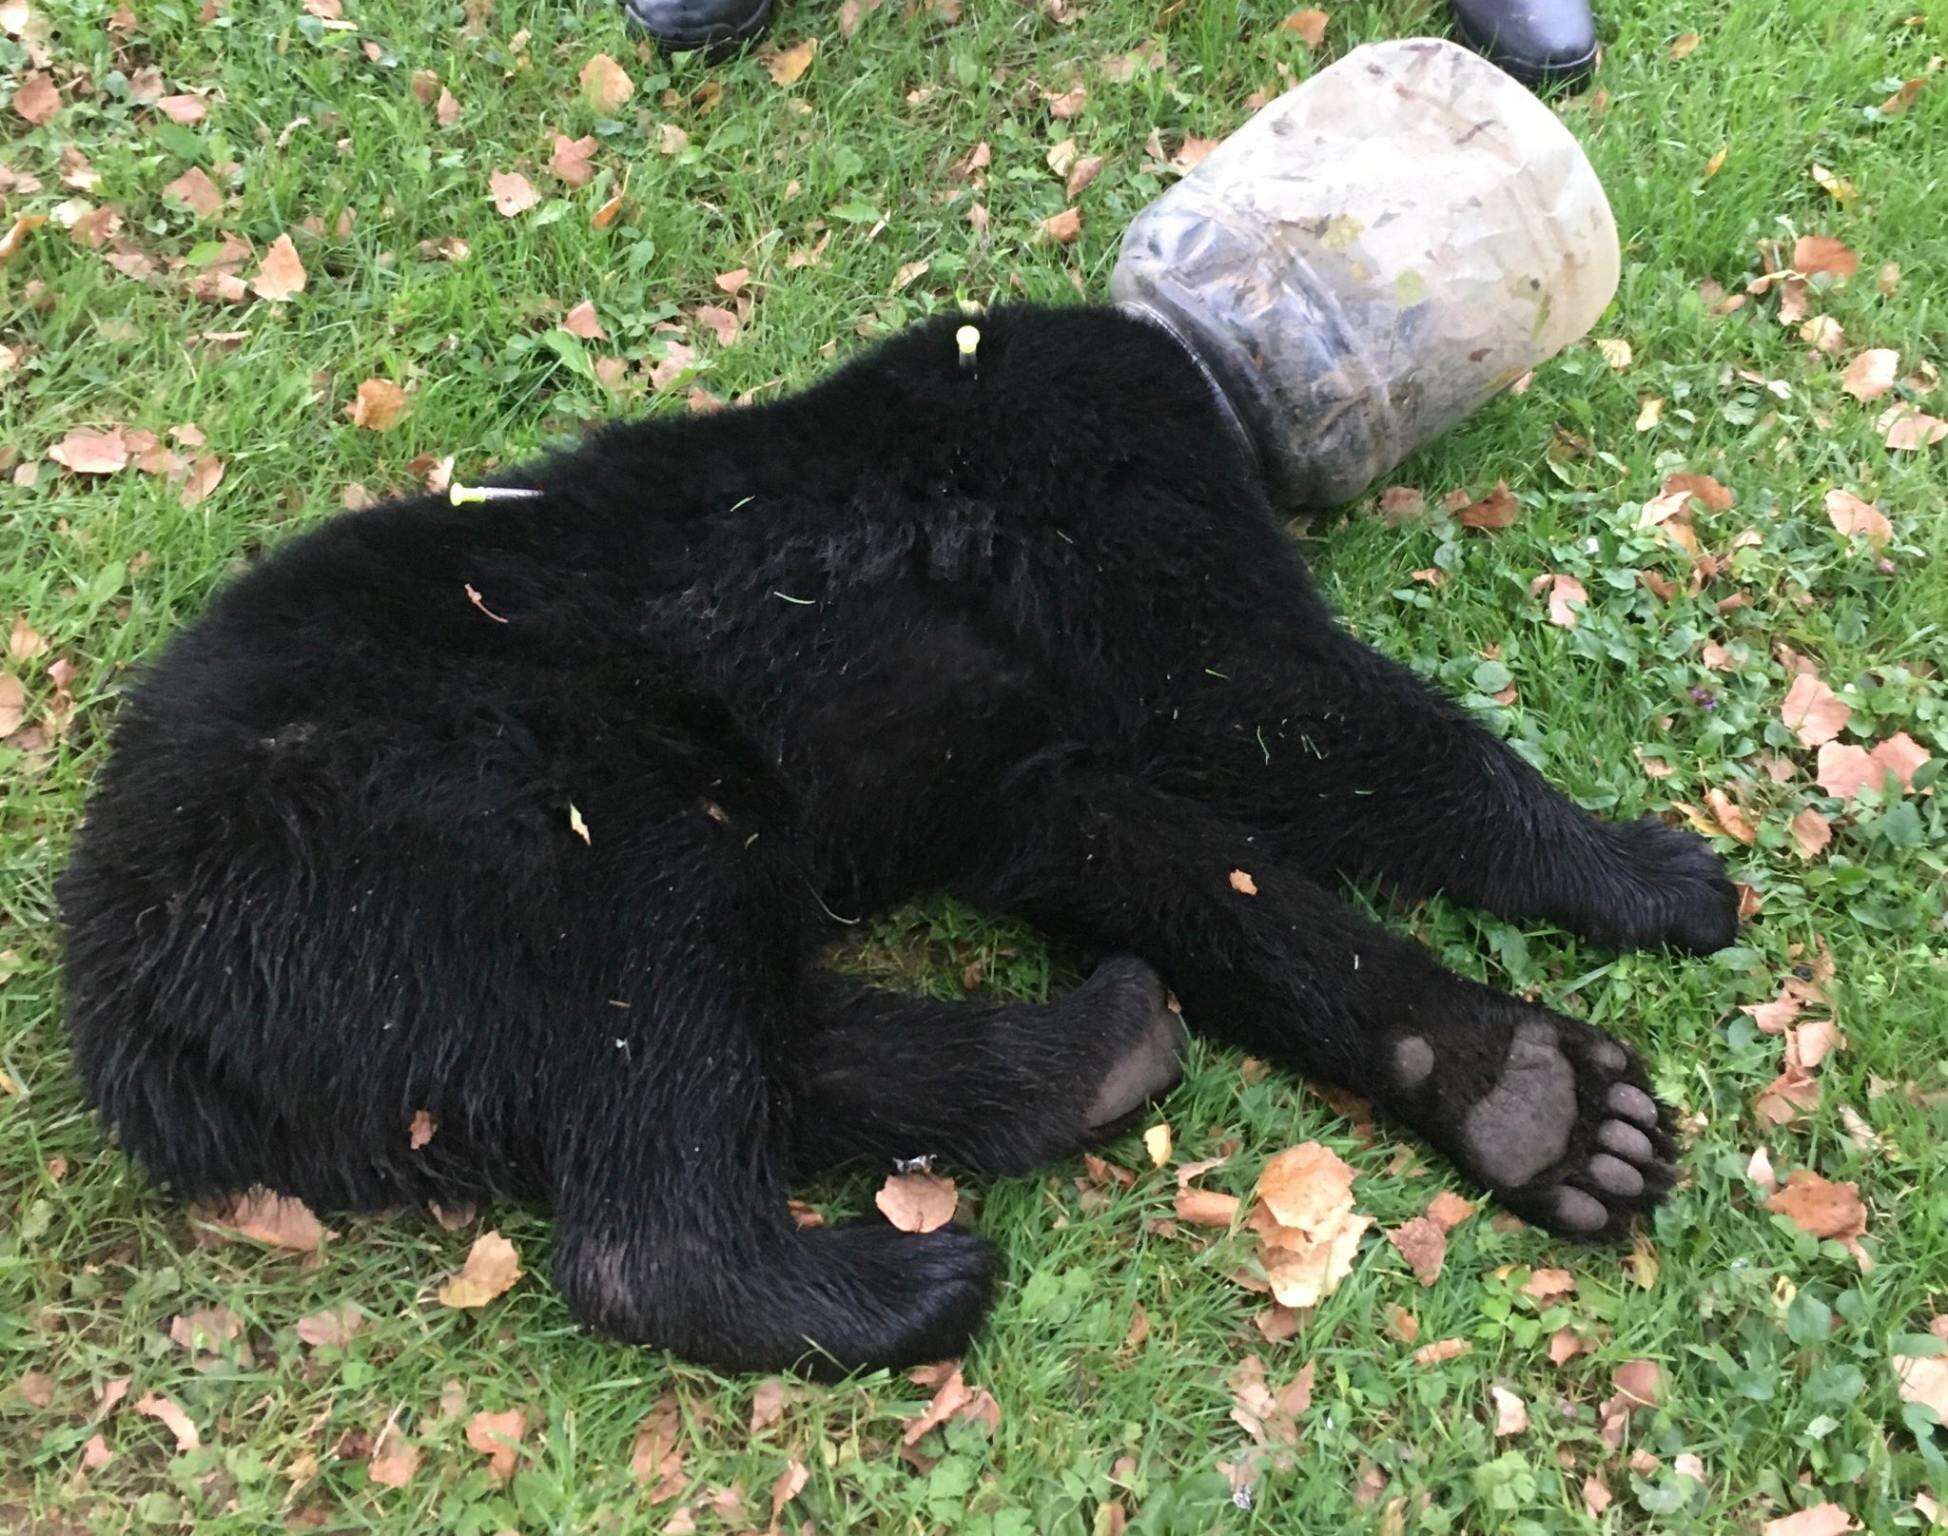 Bear cub with plastic jar on head